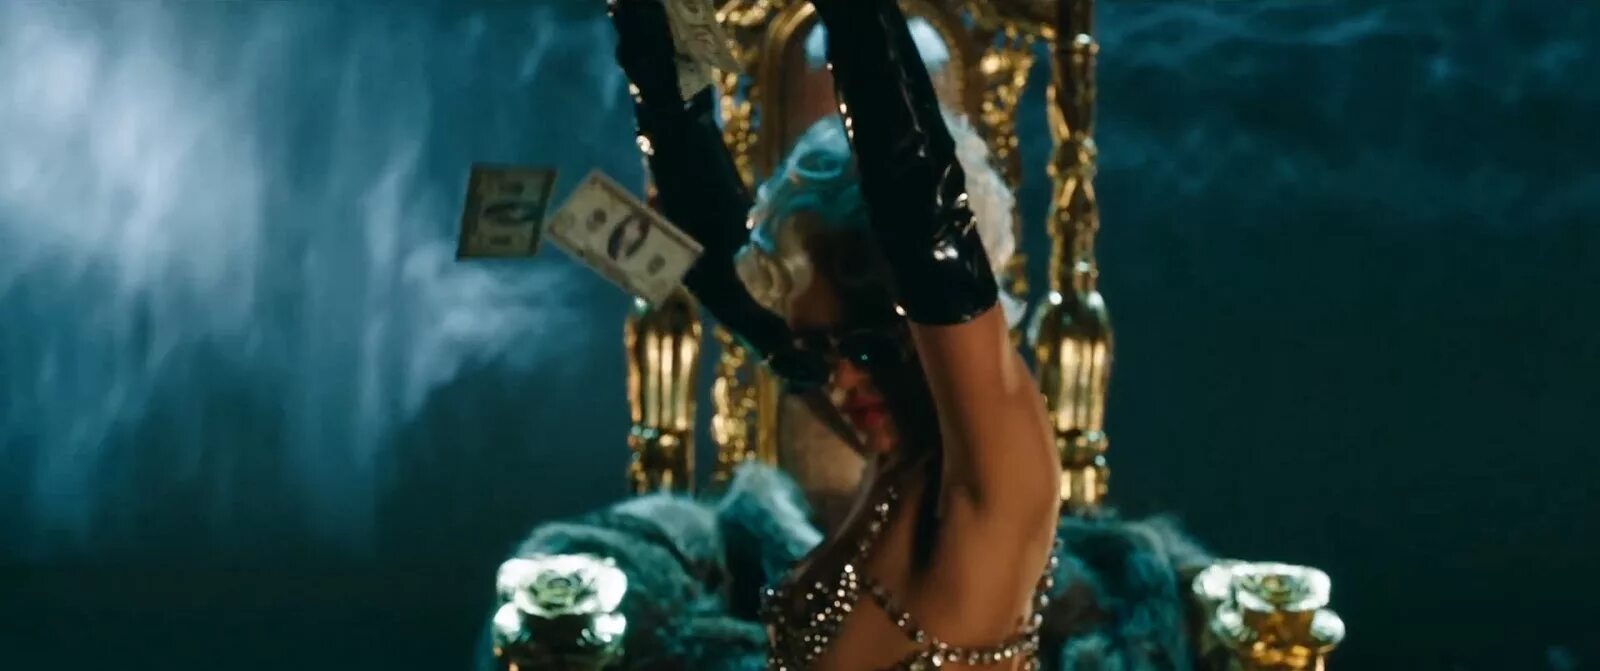 Rihanna better have my. Рианна pour it up. Рианна с деньгами. Рианна gif. Rihanna gif money.